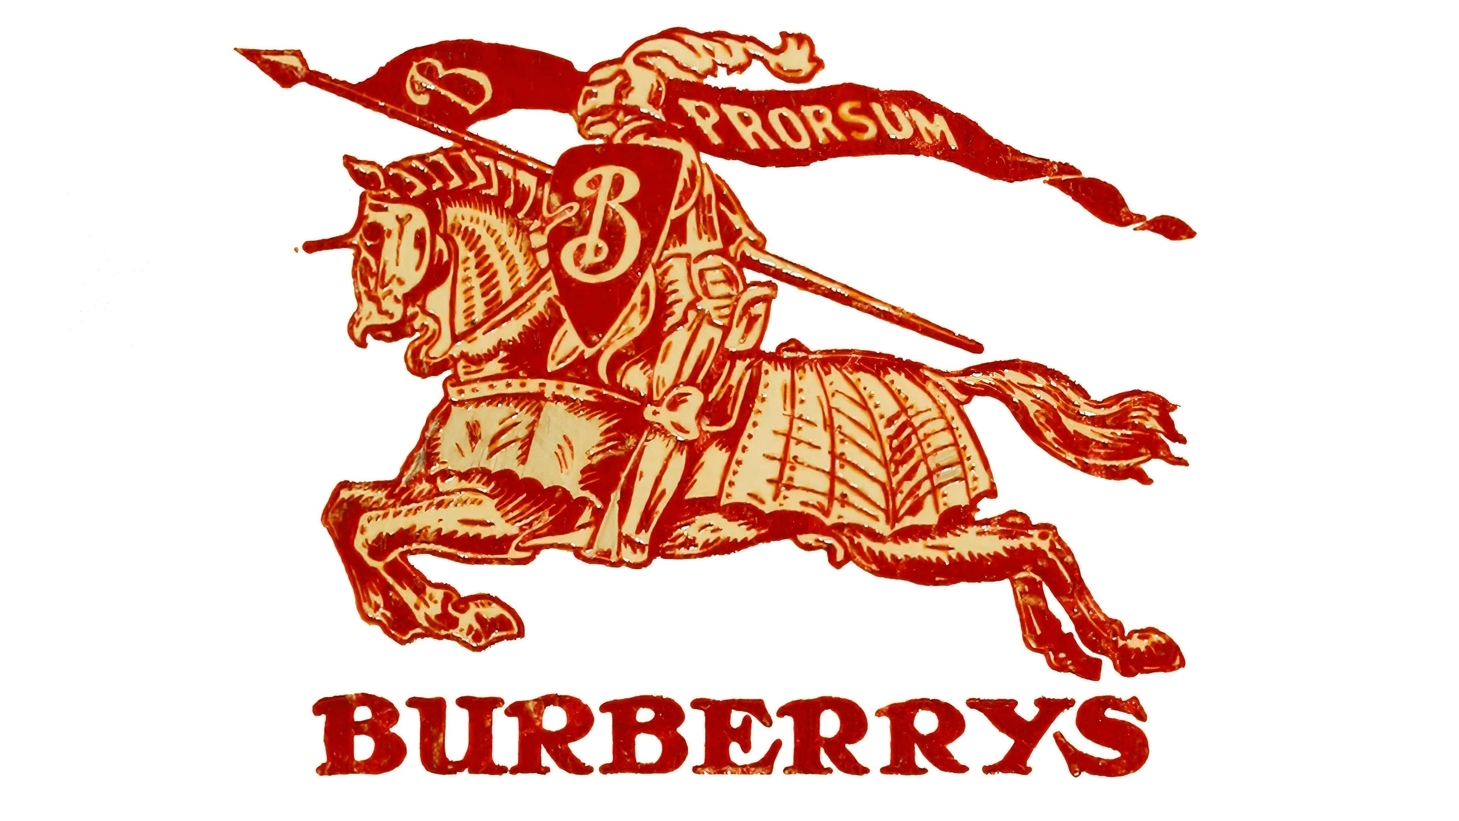 Burberrys sign 1901 1968